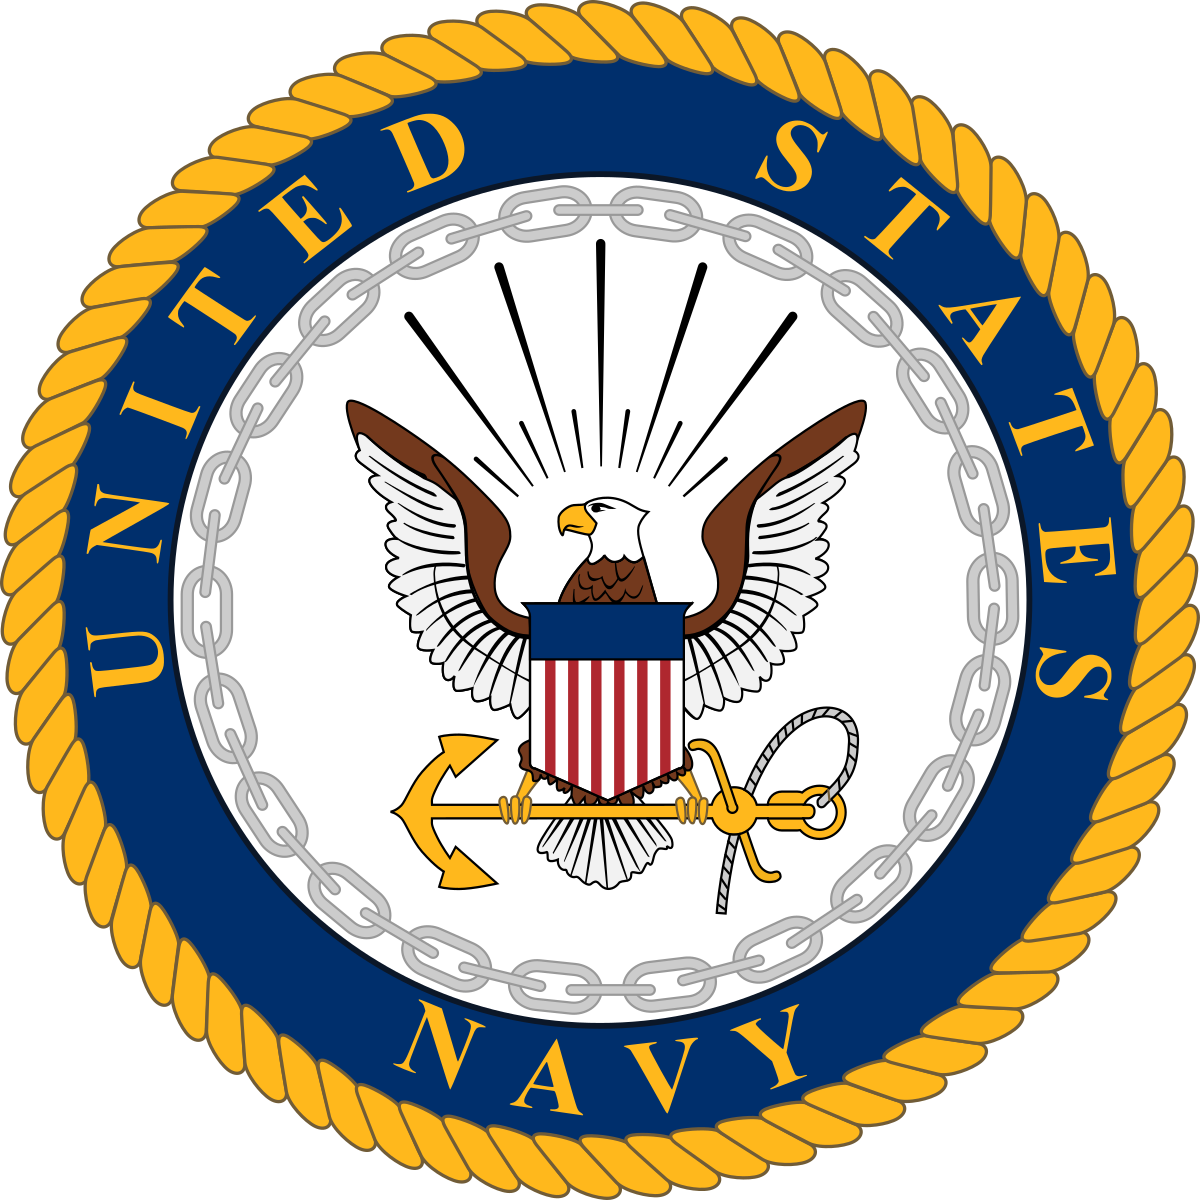 Navy map logo icon